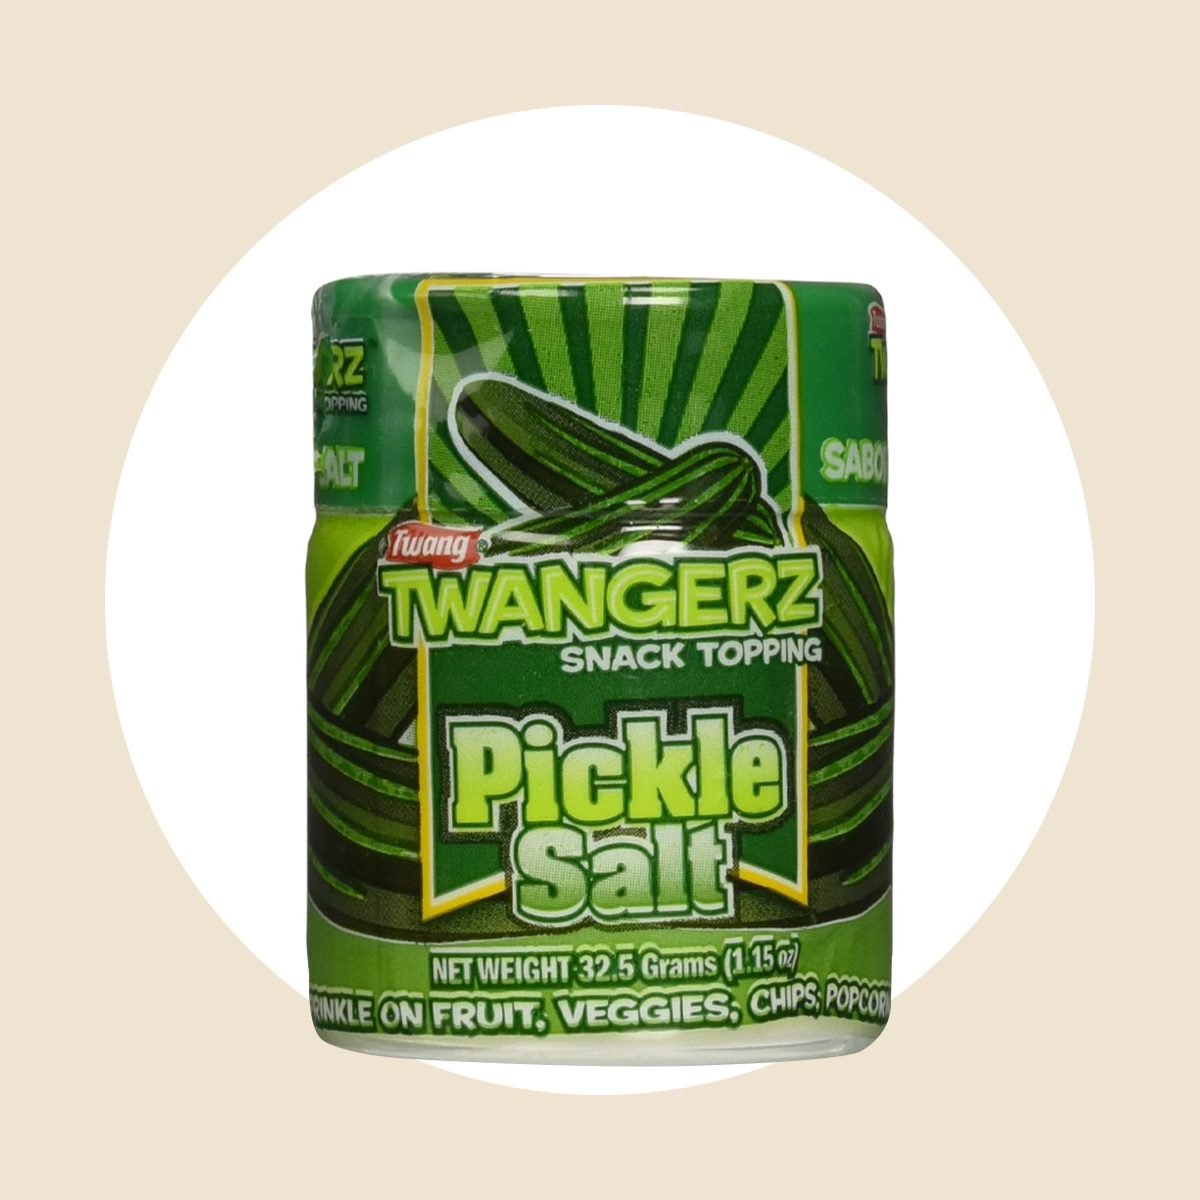 Twang Pickle Salt Ecomm Amazon.com